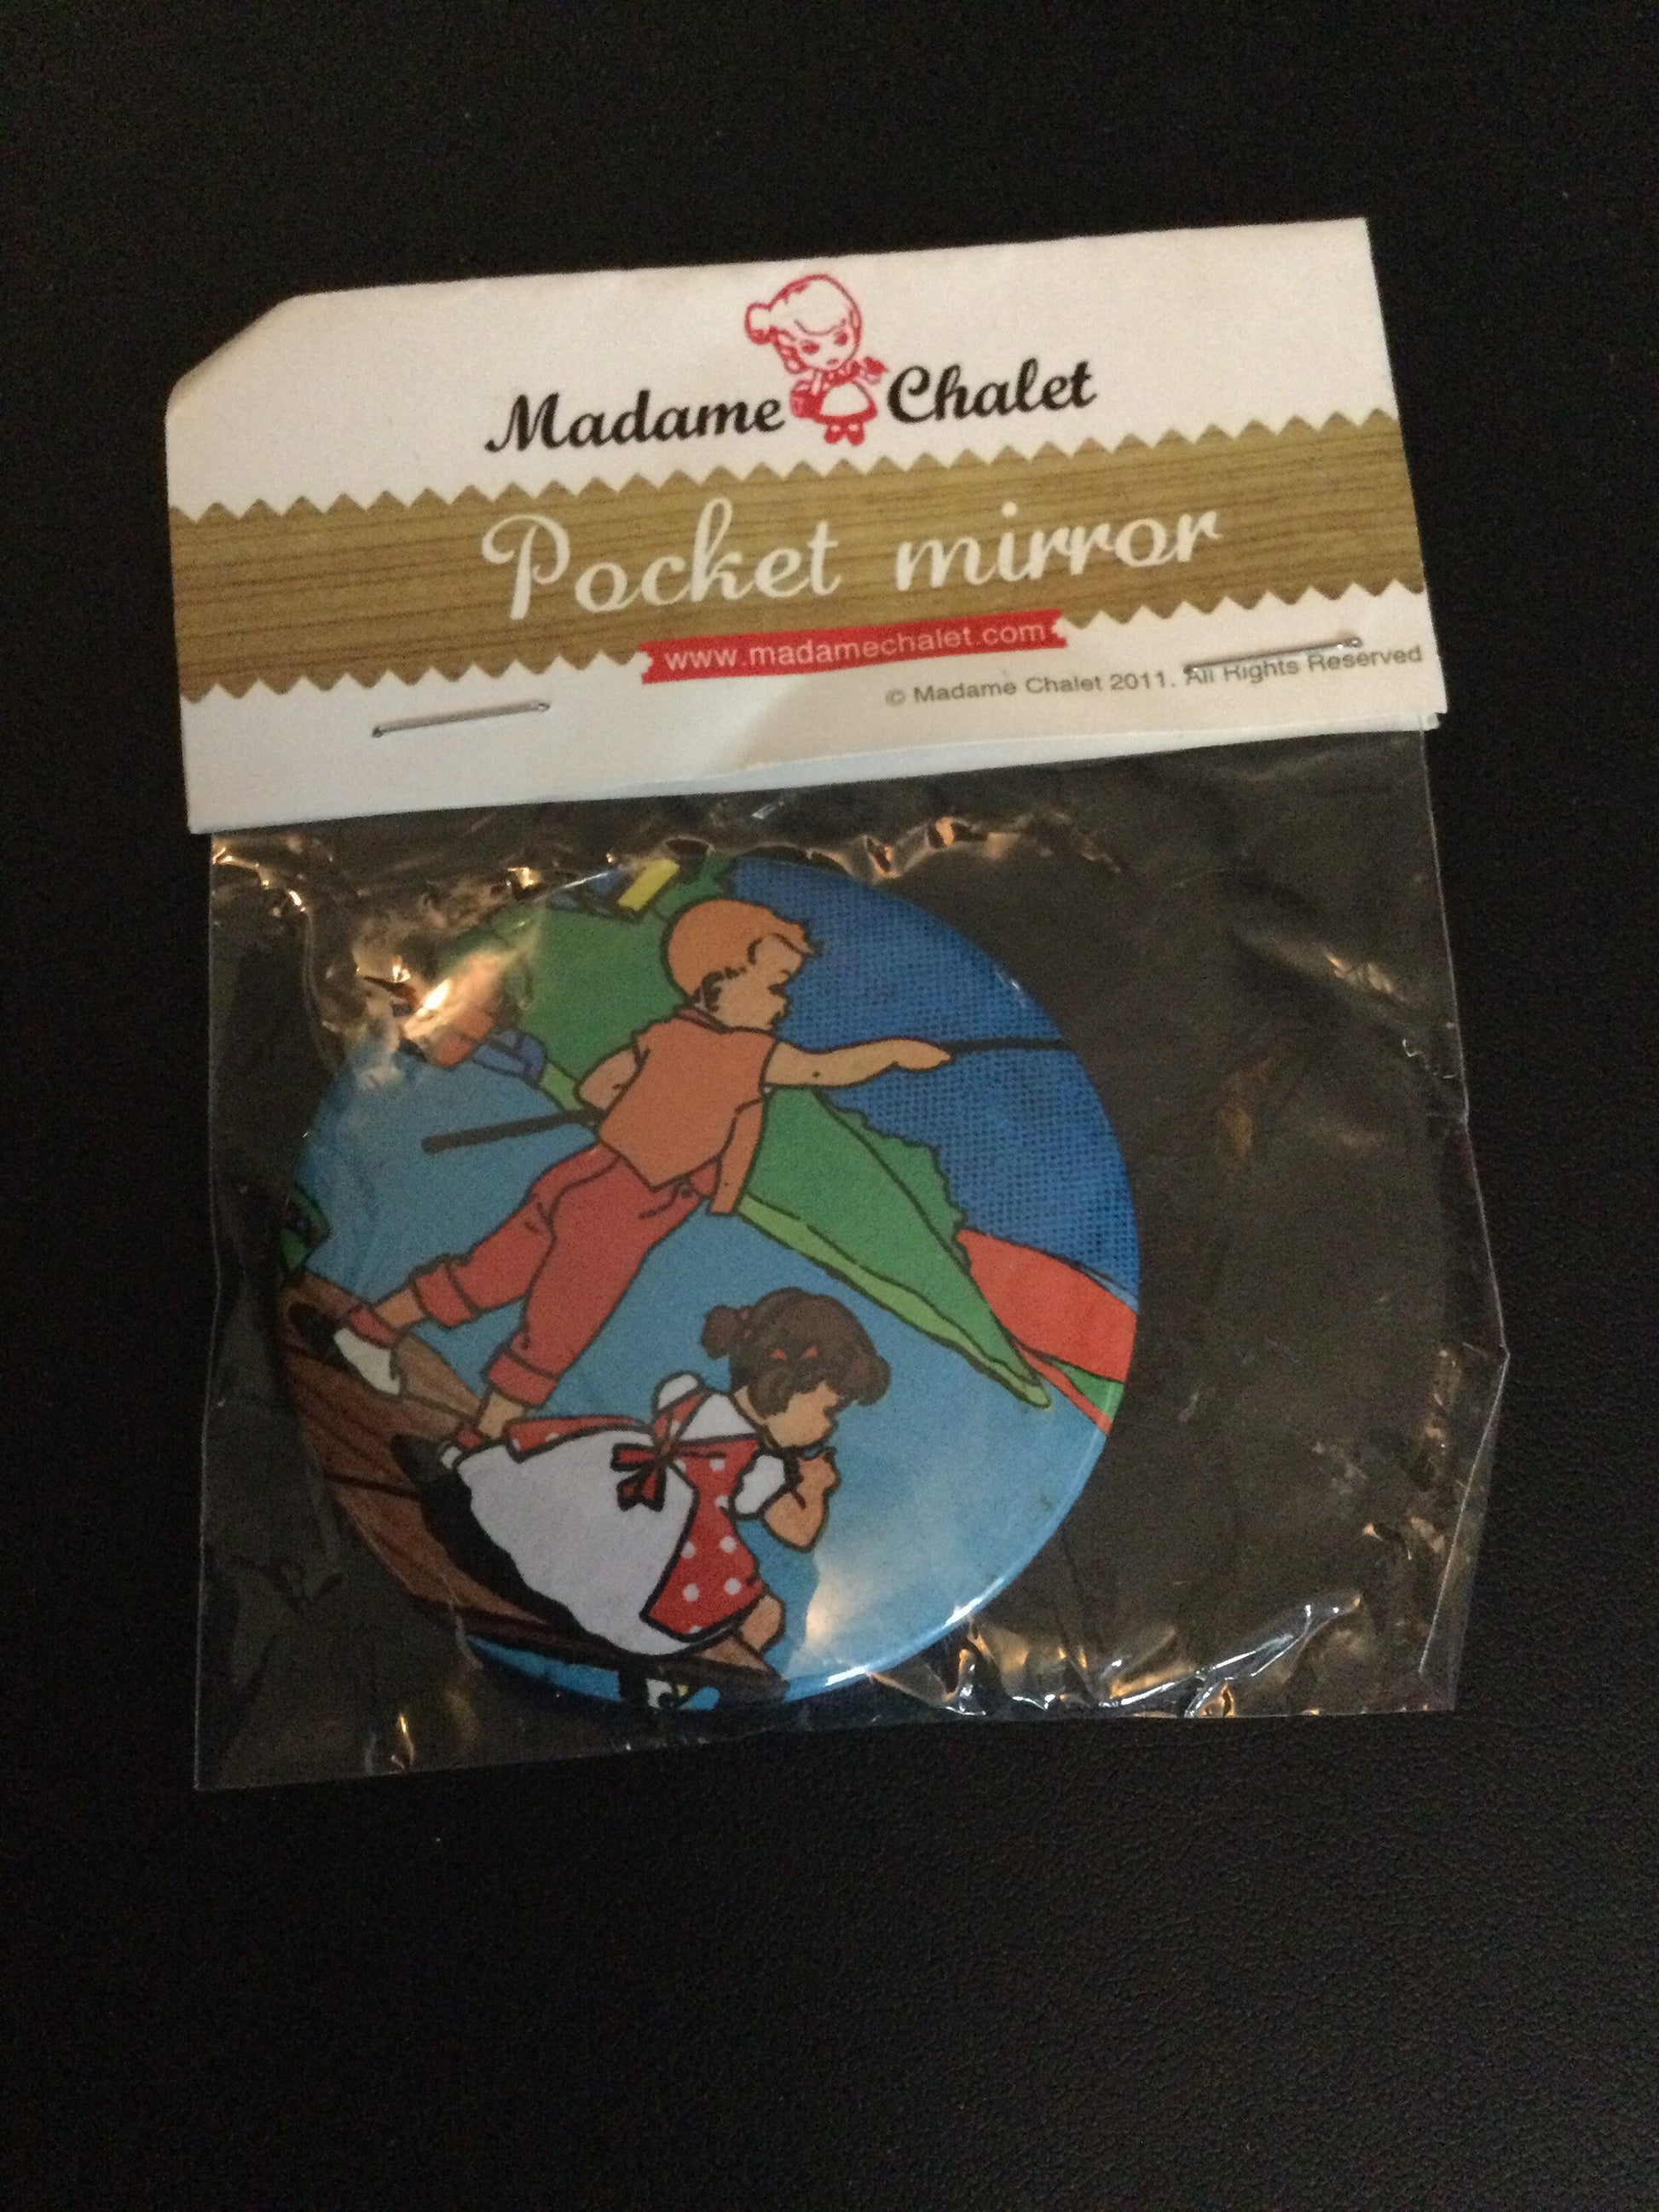 Retro cute and kitsch small handbag purse size pocket hand mirror. Evening bag mirror Madame chalet Swiss designs